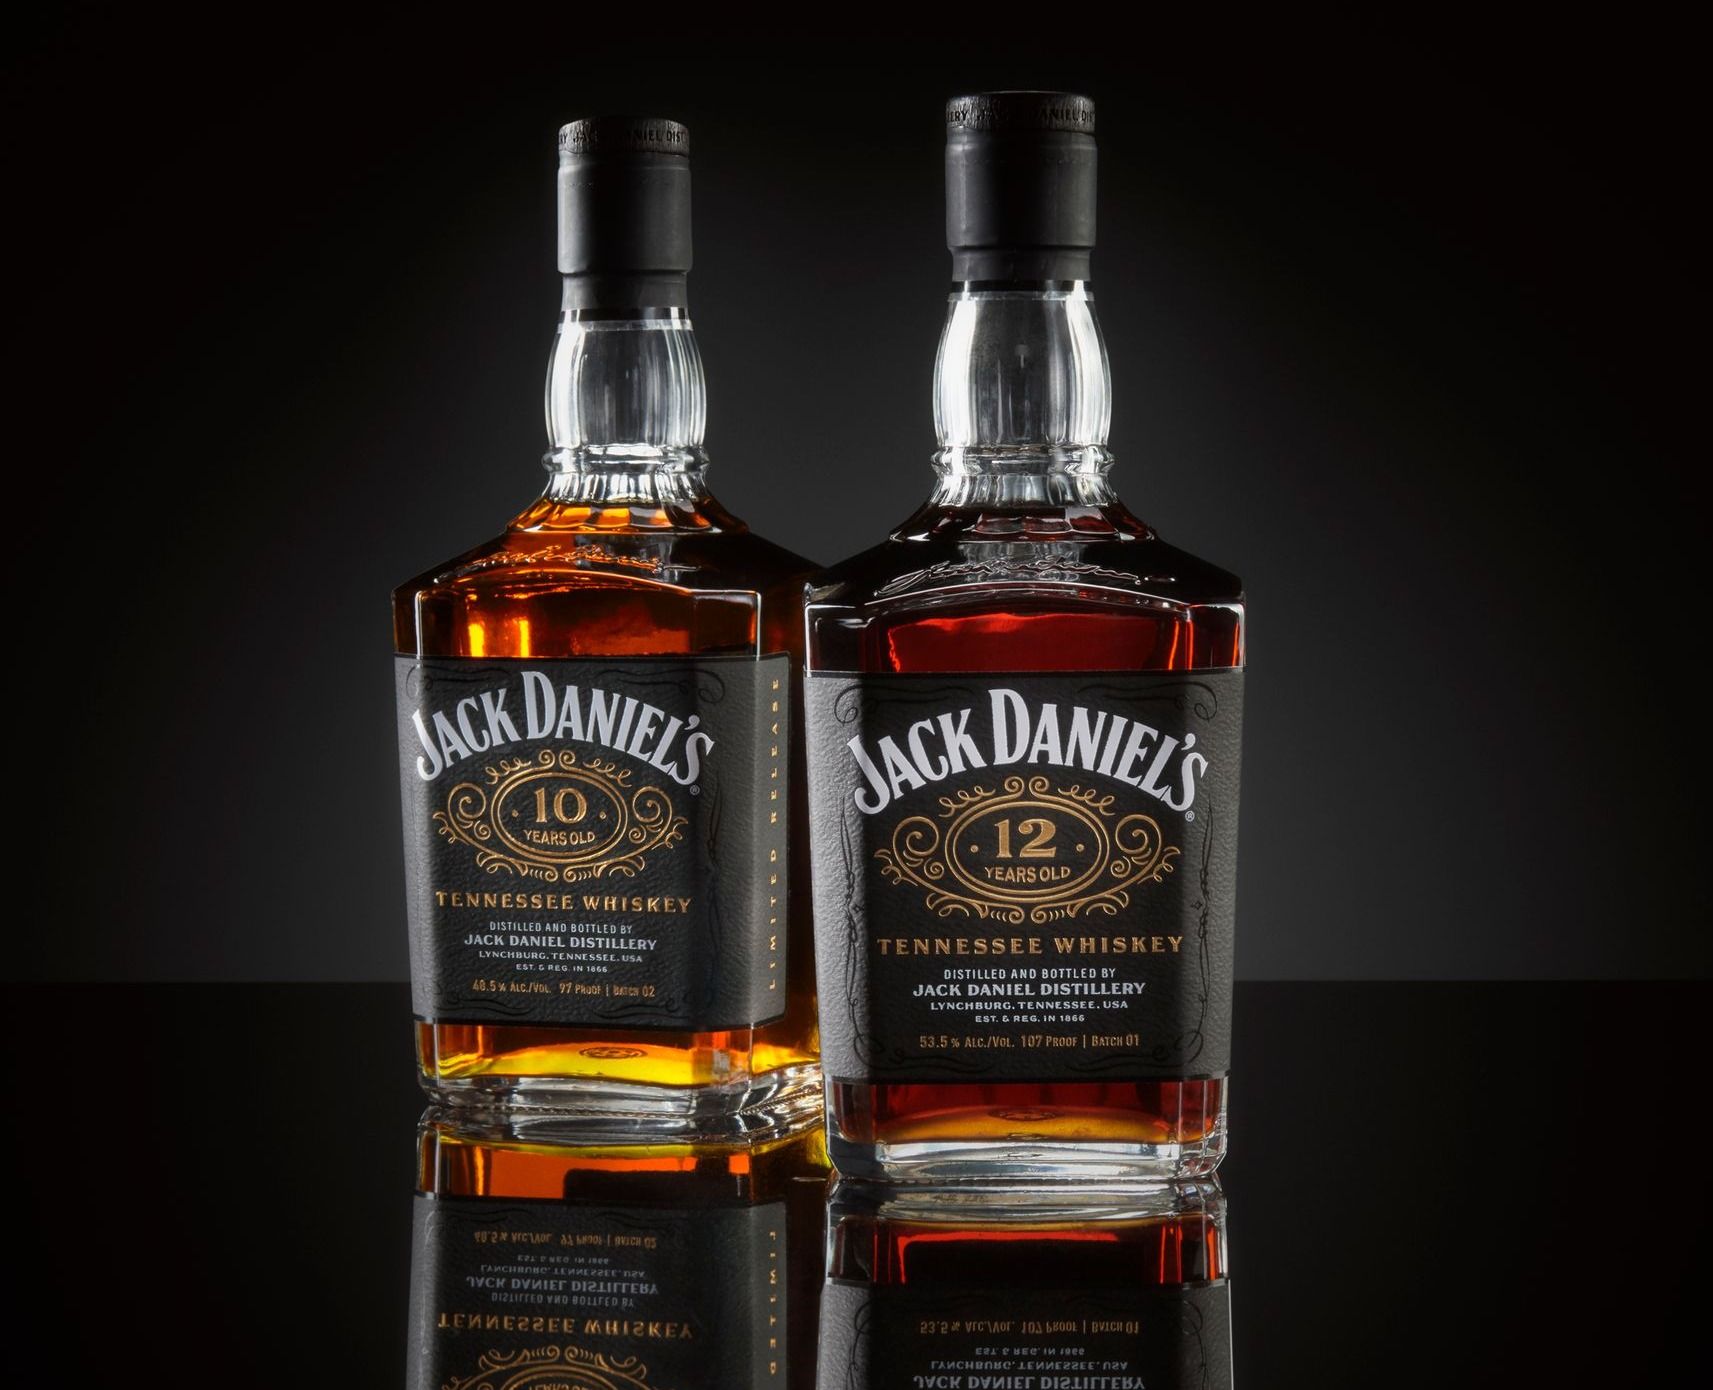 Whisky Jack Daniels, 700 ml Jack Daniels – price, reviews